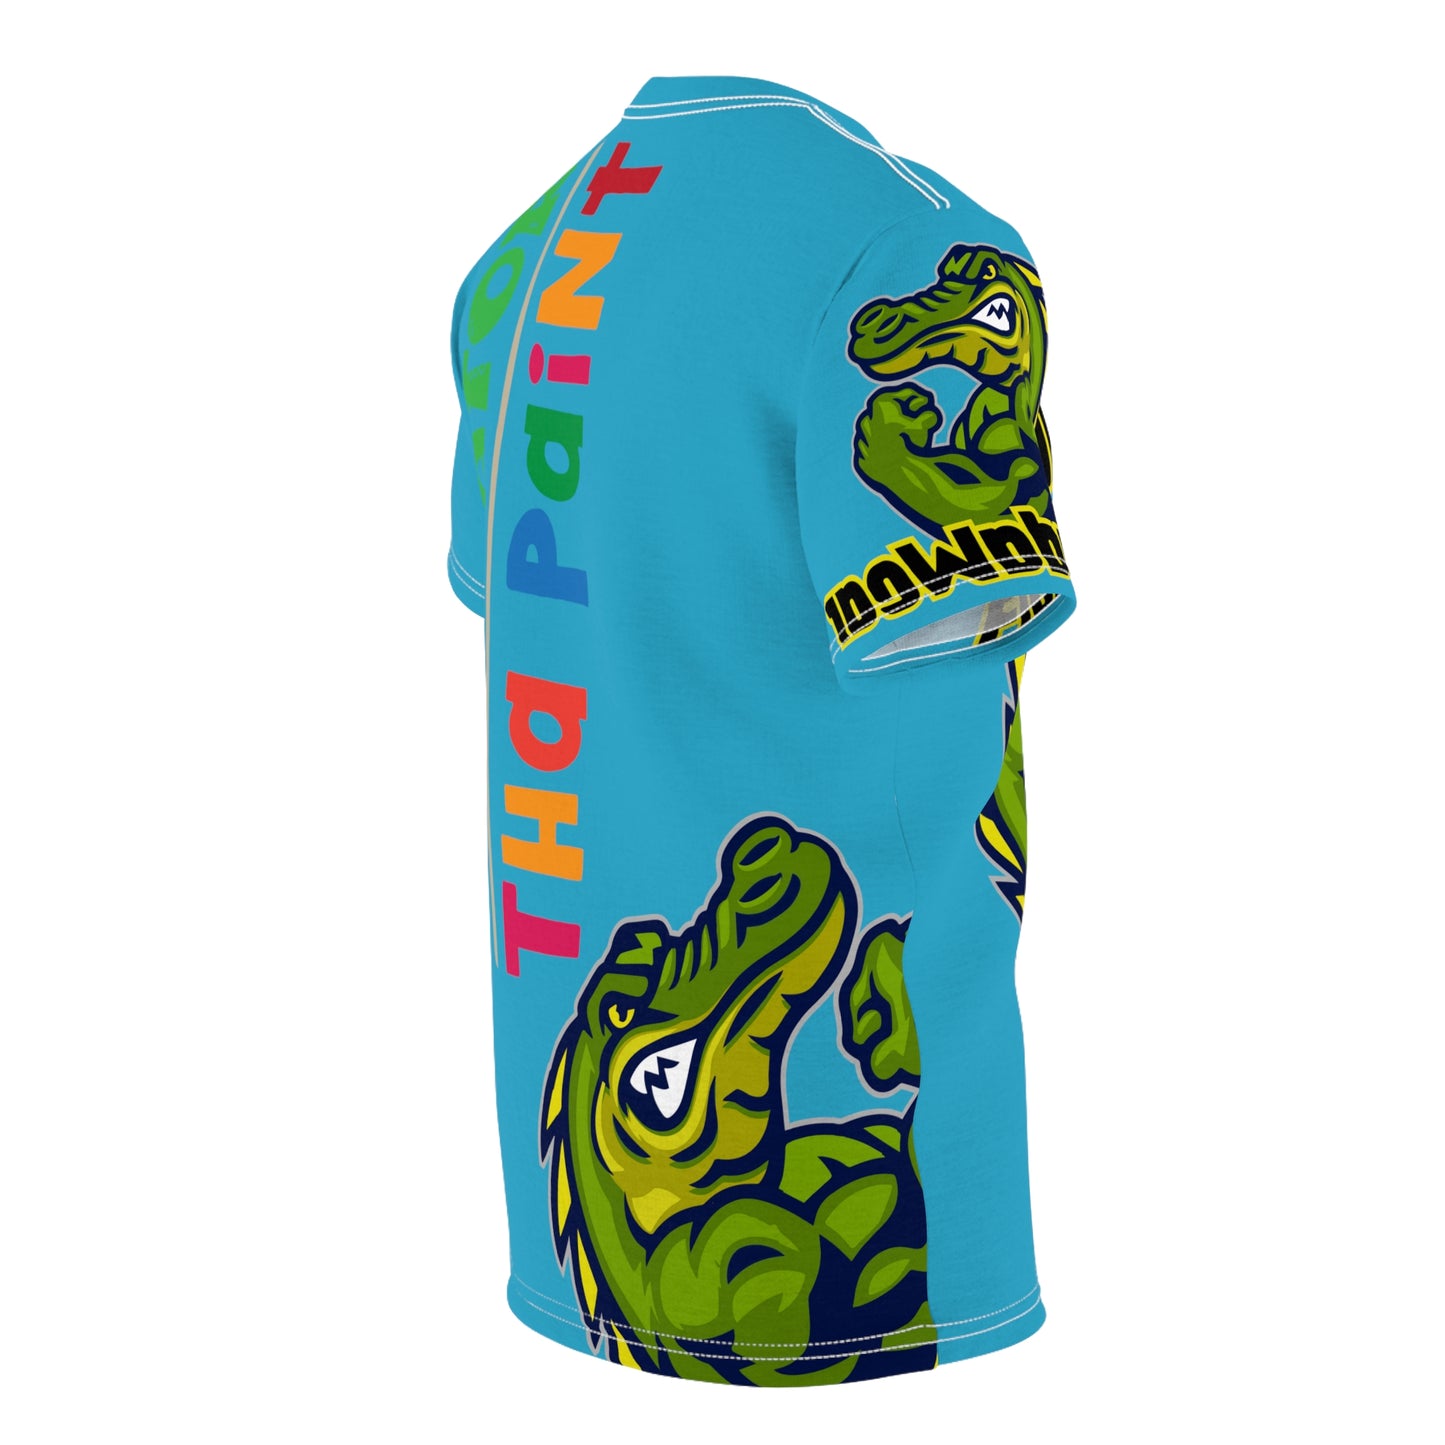 Turquoise Flawdawear Limited Edition OG Alligator Papuh Playuz “Alligator Tha Paint” Unisex Cut & Sew Playuz Tee